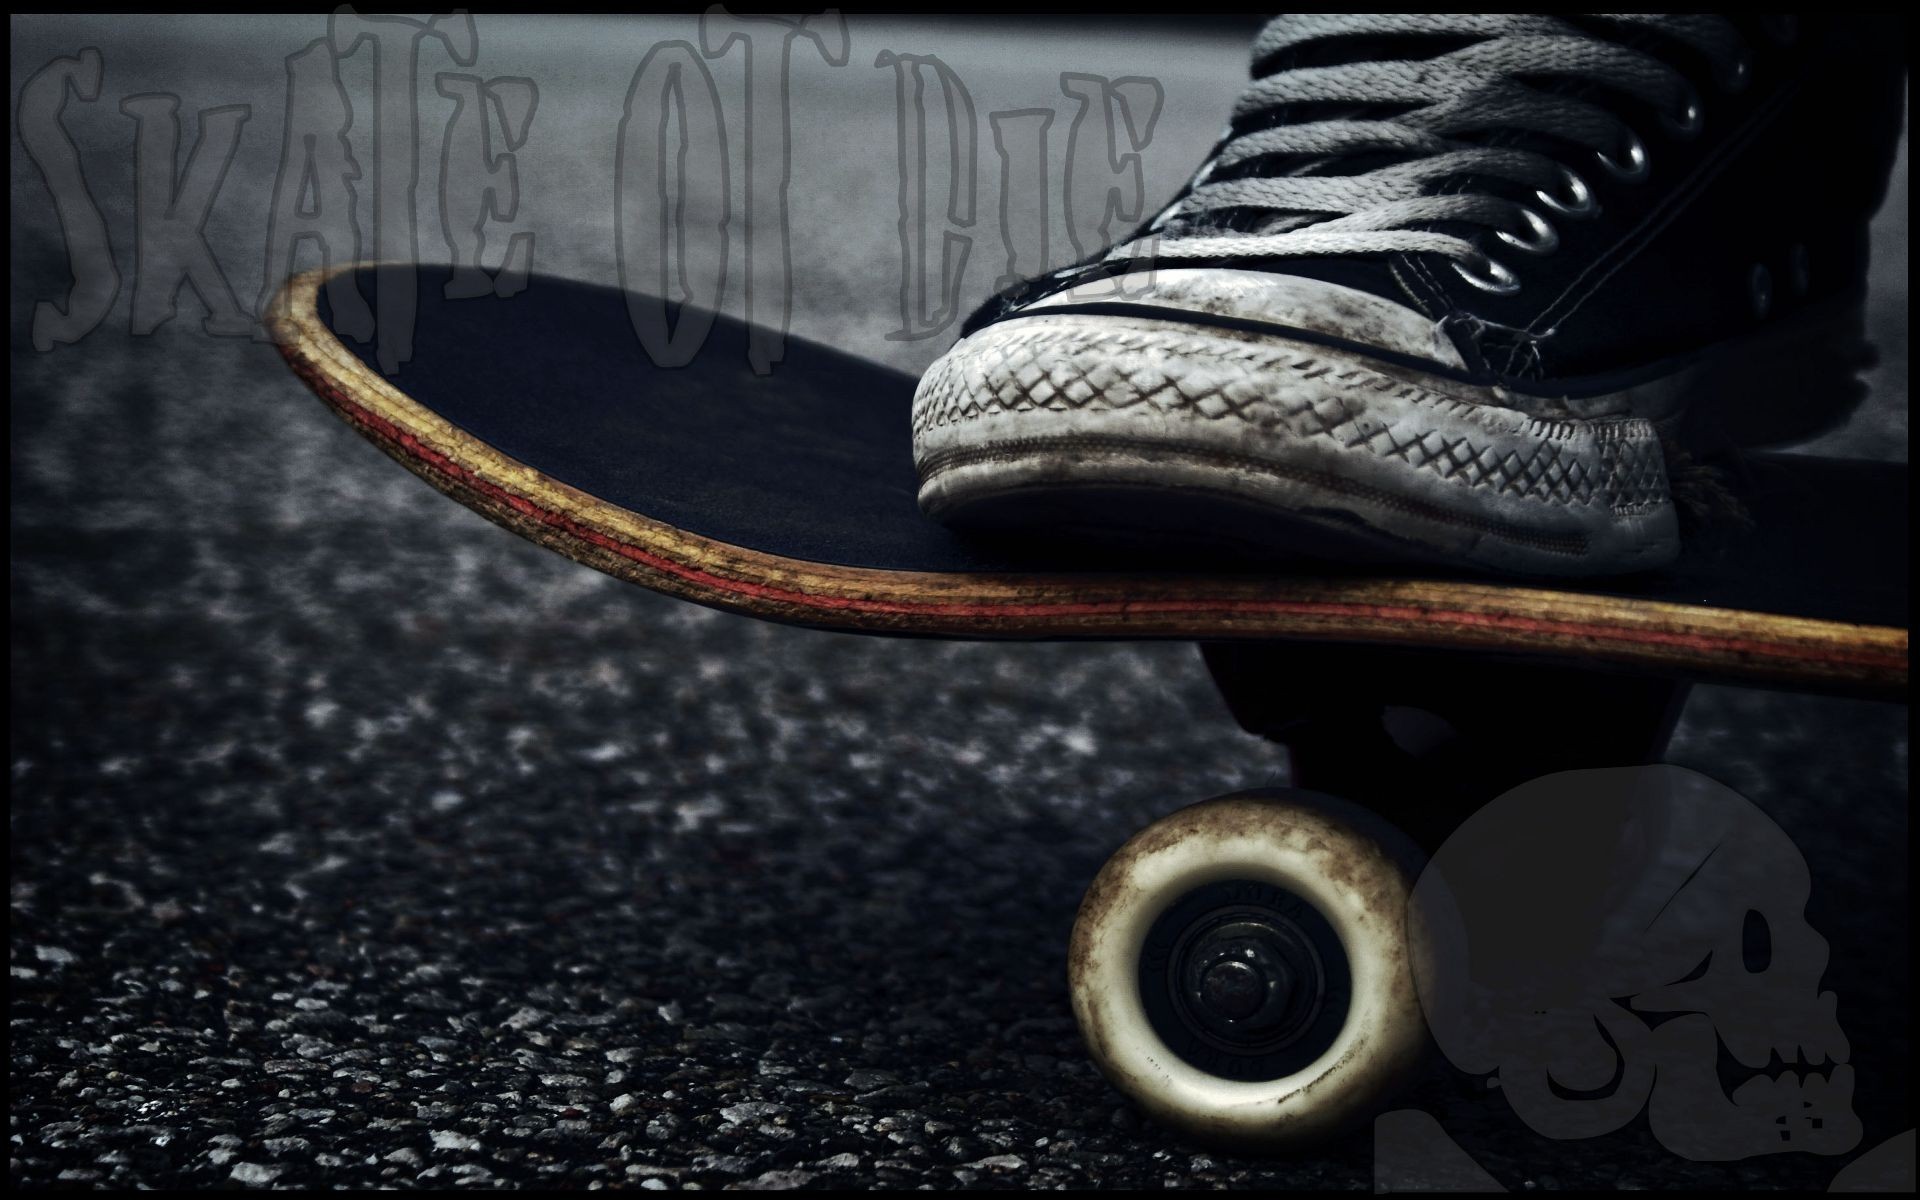 fantastici sfondi per skateboard,calzature,skateboard,scarpa da skate,andare con lo skateboard,pattini